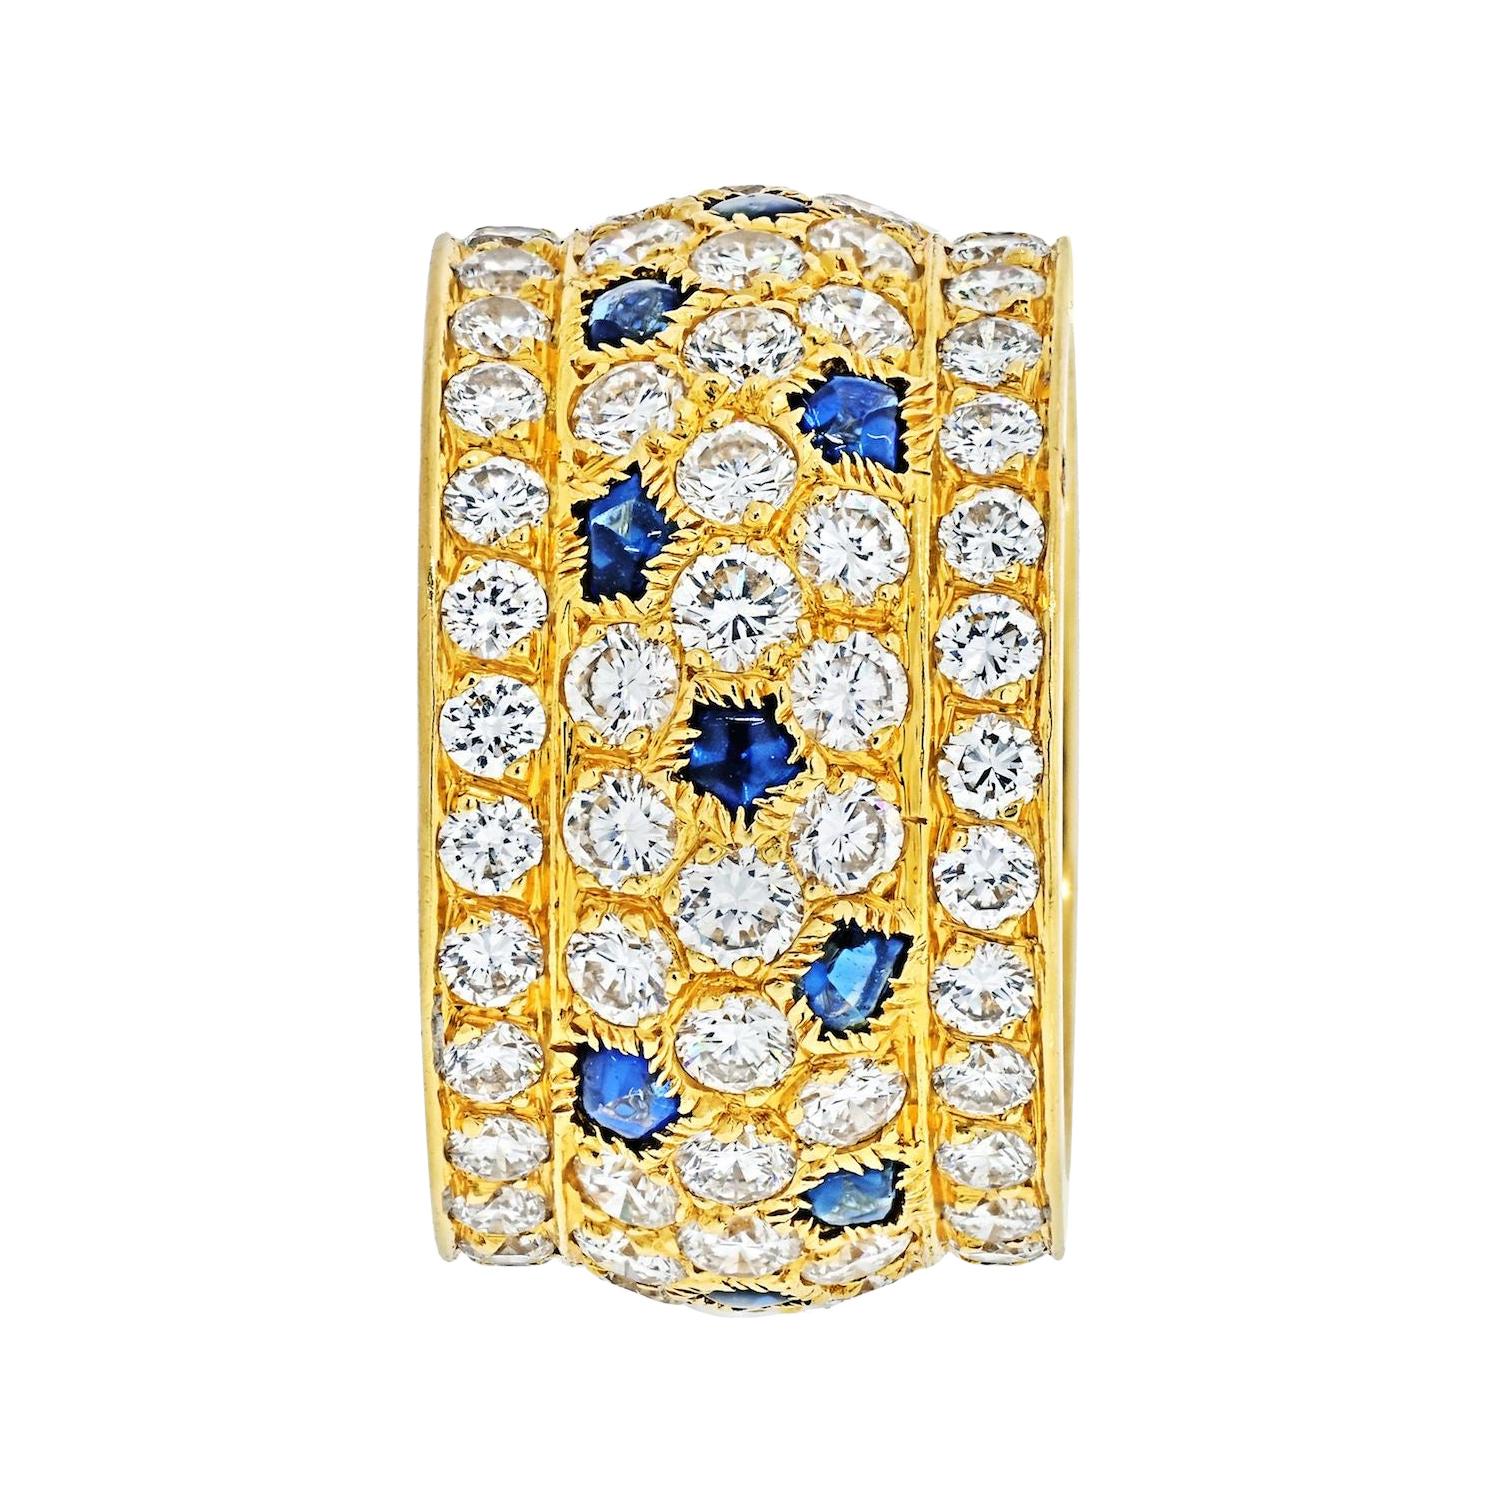 Cartier 18K Gelbgold Nigeria Diamant Saphir Ring.
Ring 